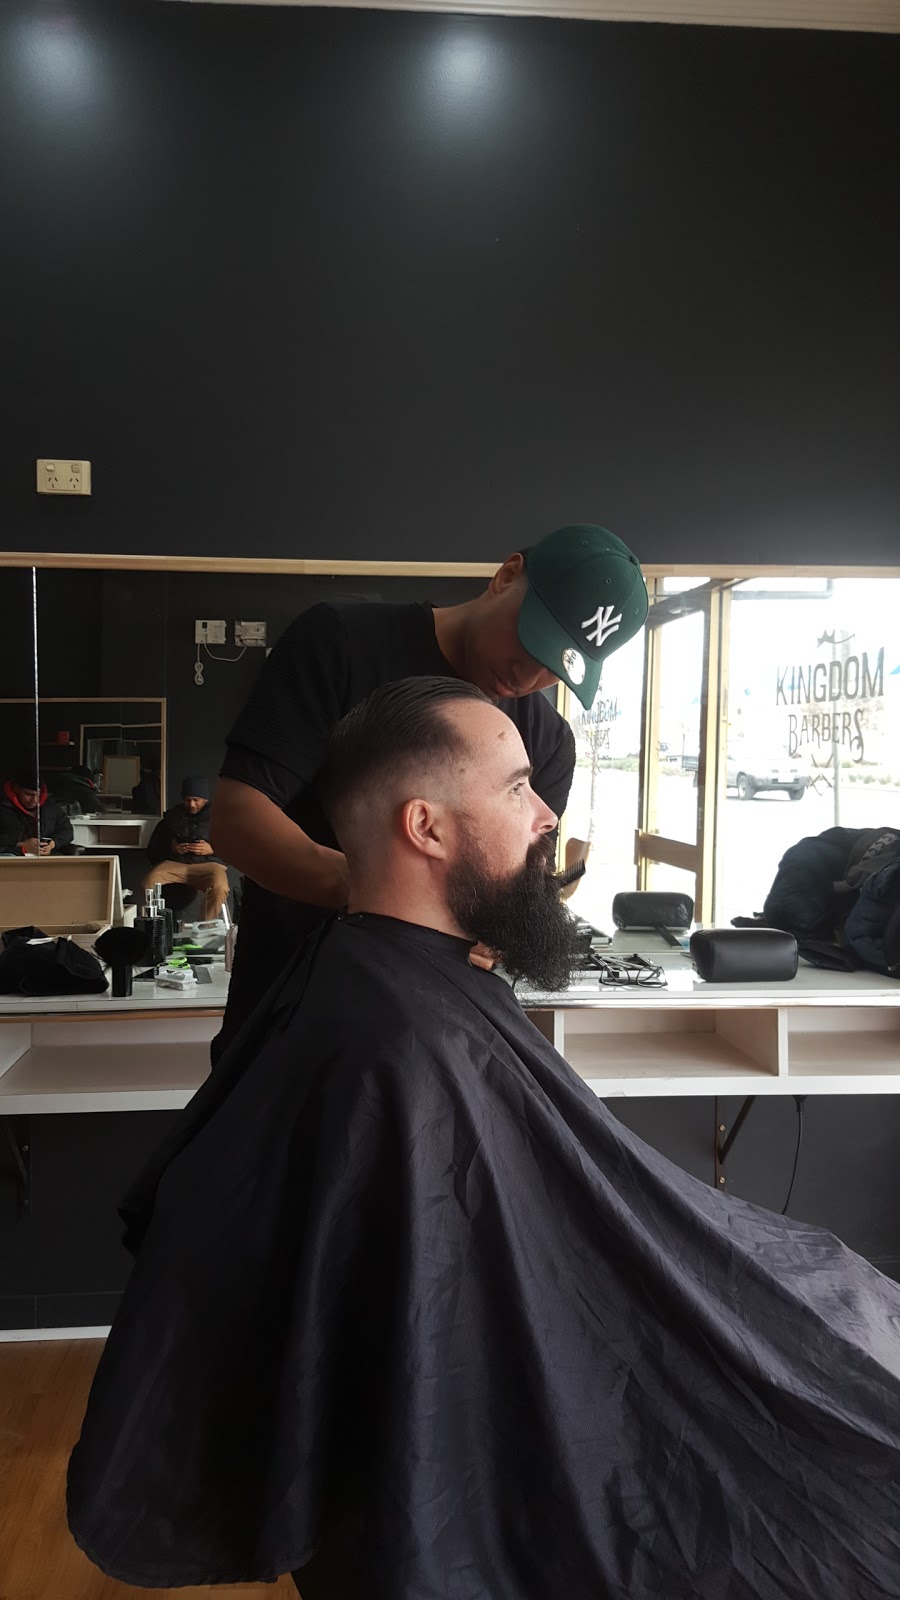 Kingdom Barbers Melbourne | 169 Sunshine Rd, West Footscray VIC 3012, Australia | Phone: 0481 138 941